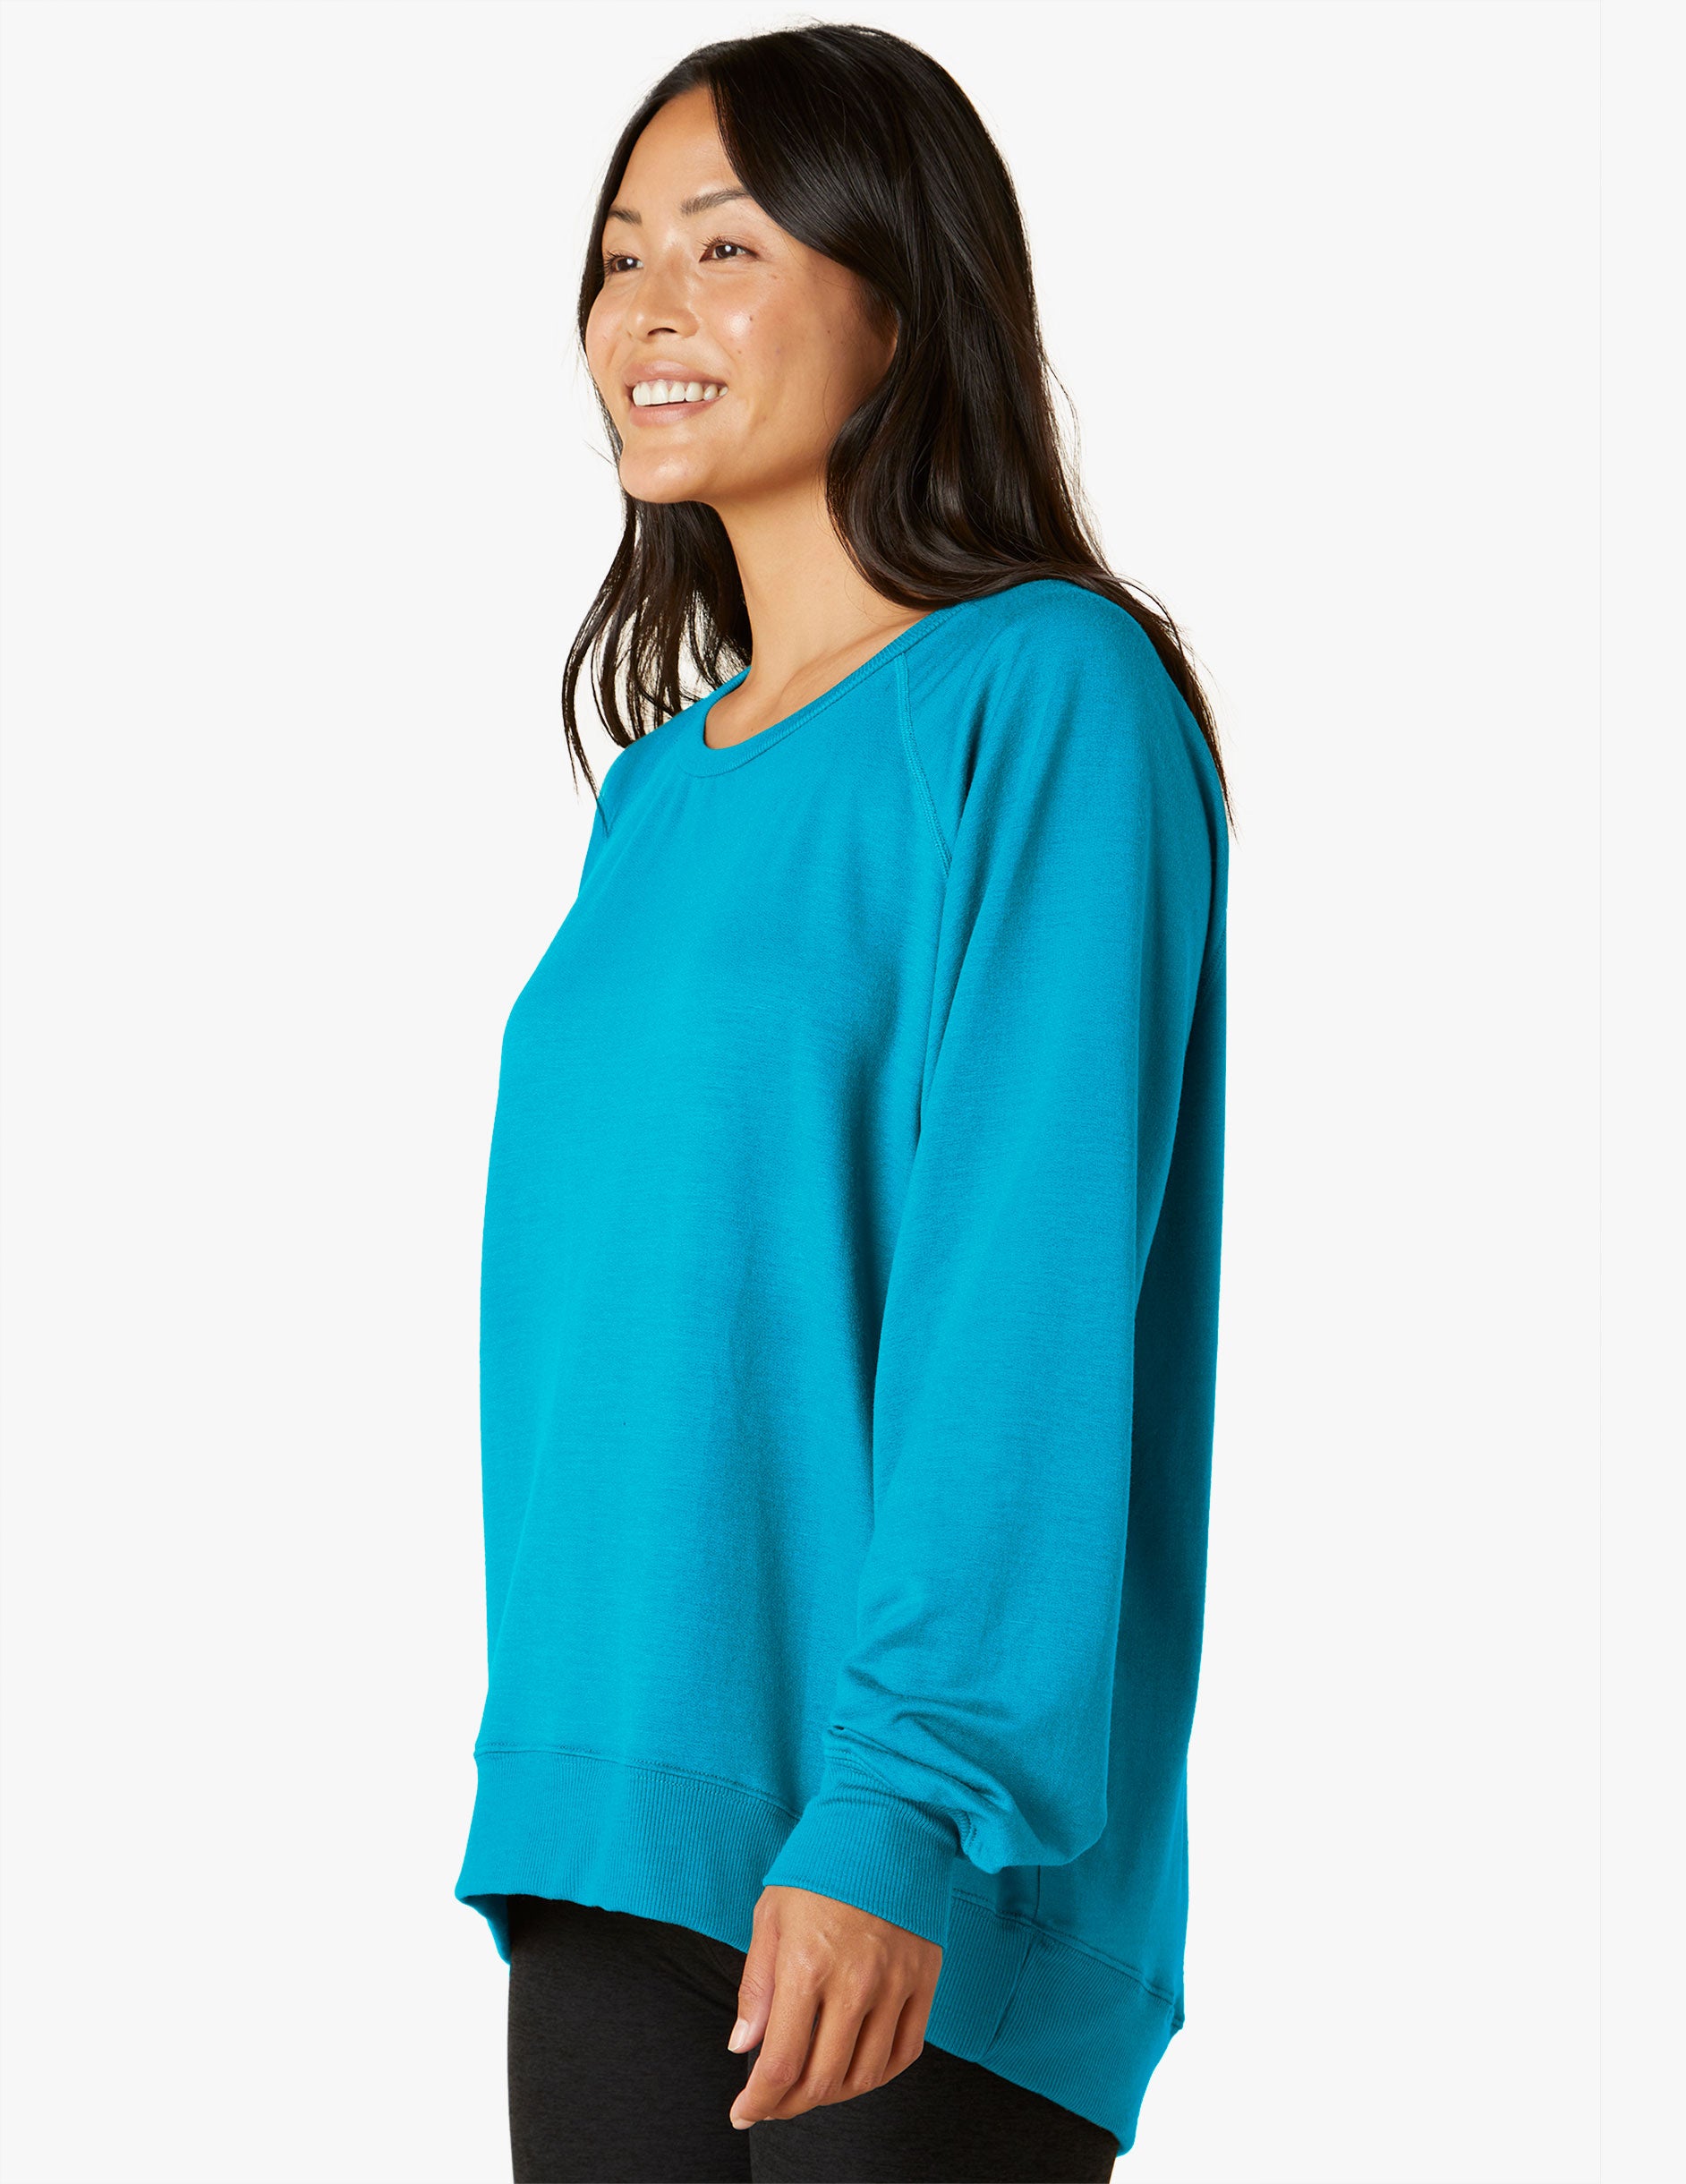 blue long sleeve sweatshirt